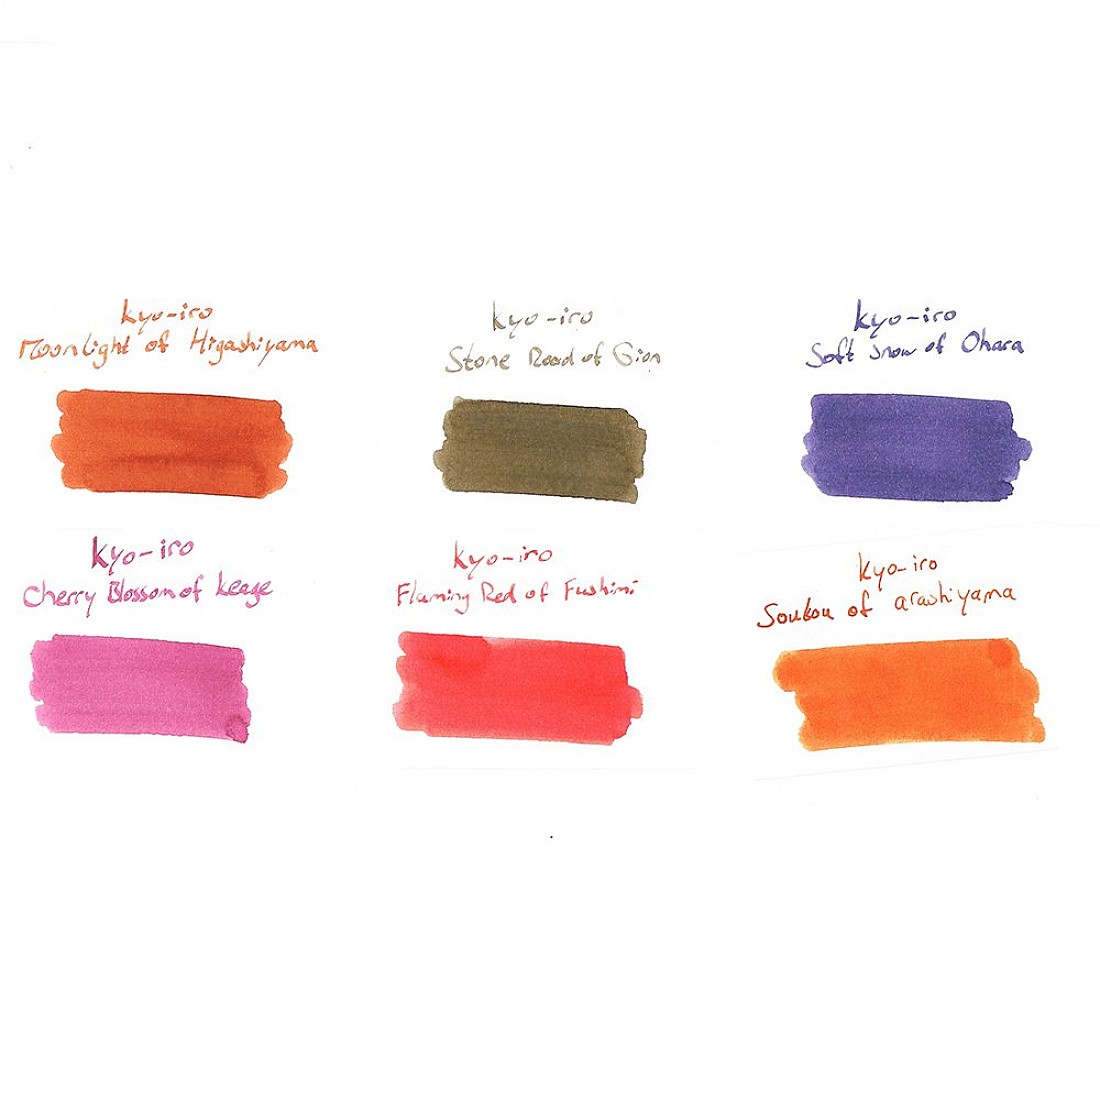 Kyo-iro Ink - Ink Bottles (5 colors)